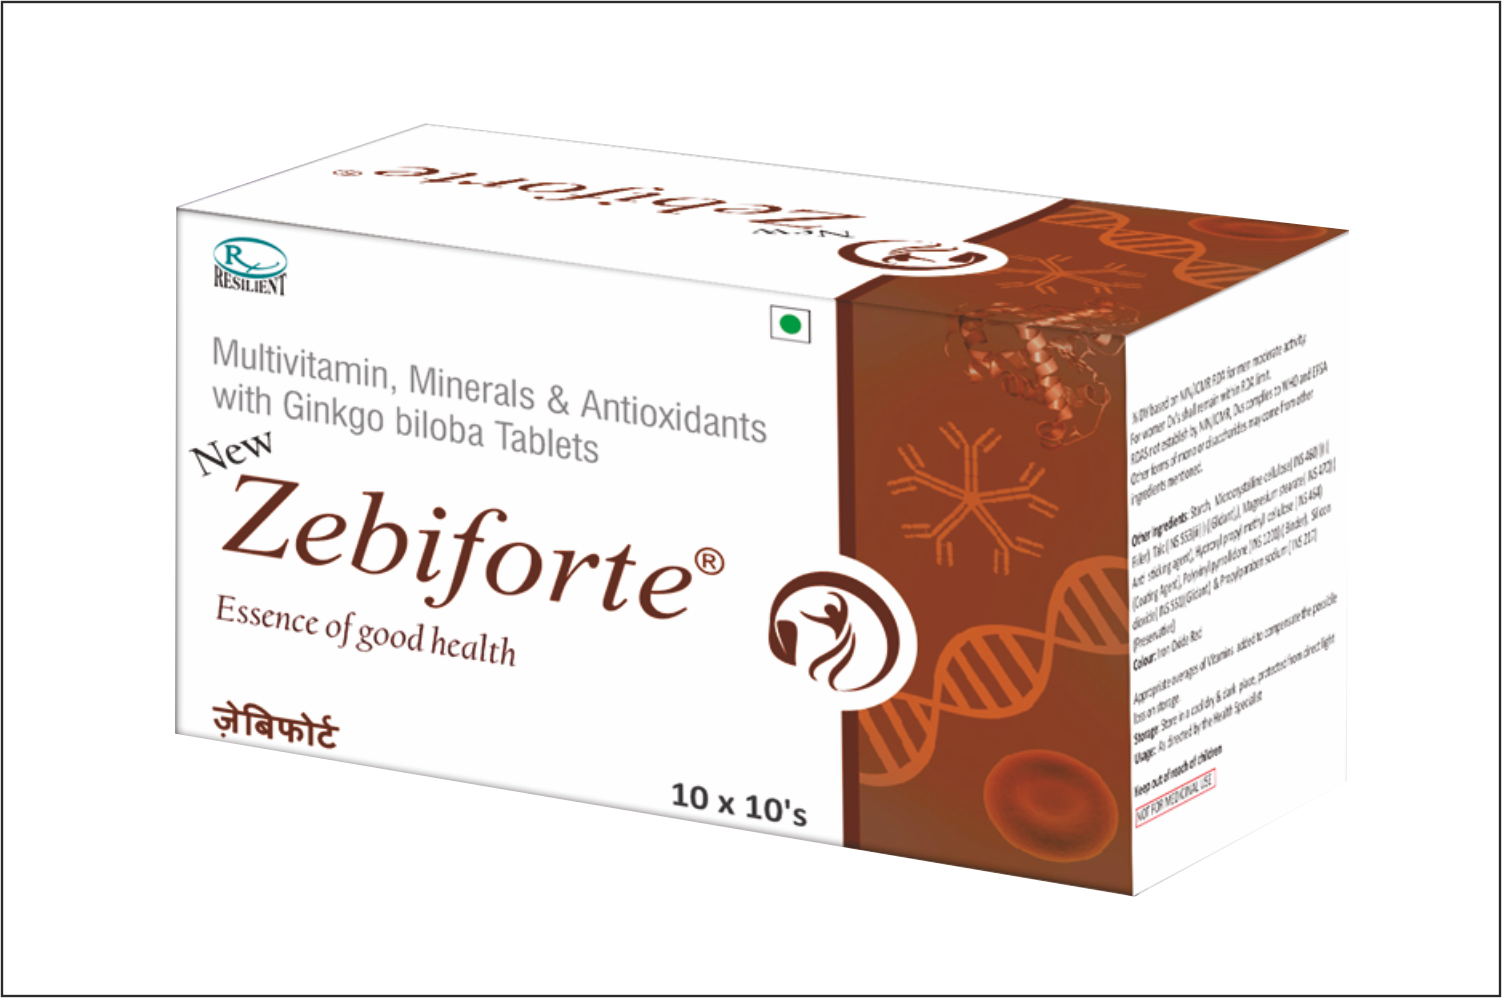 Zebiforte tablets